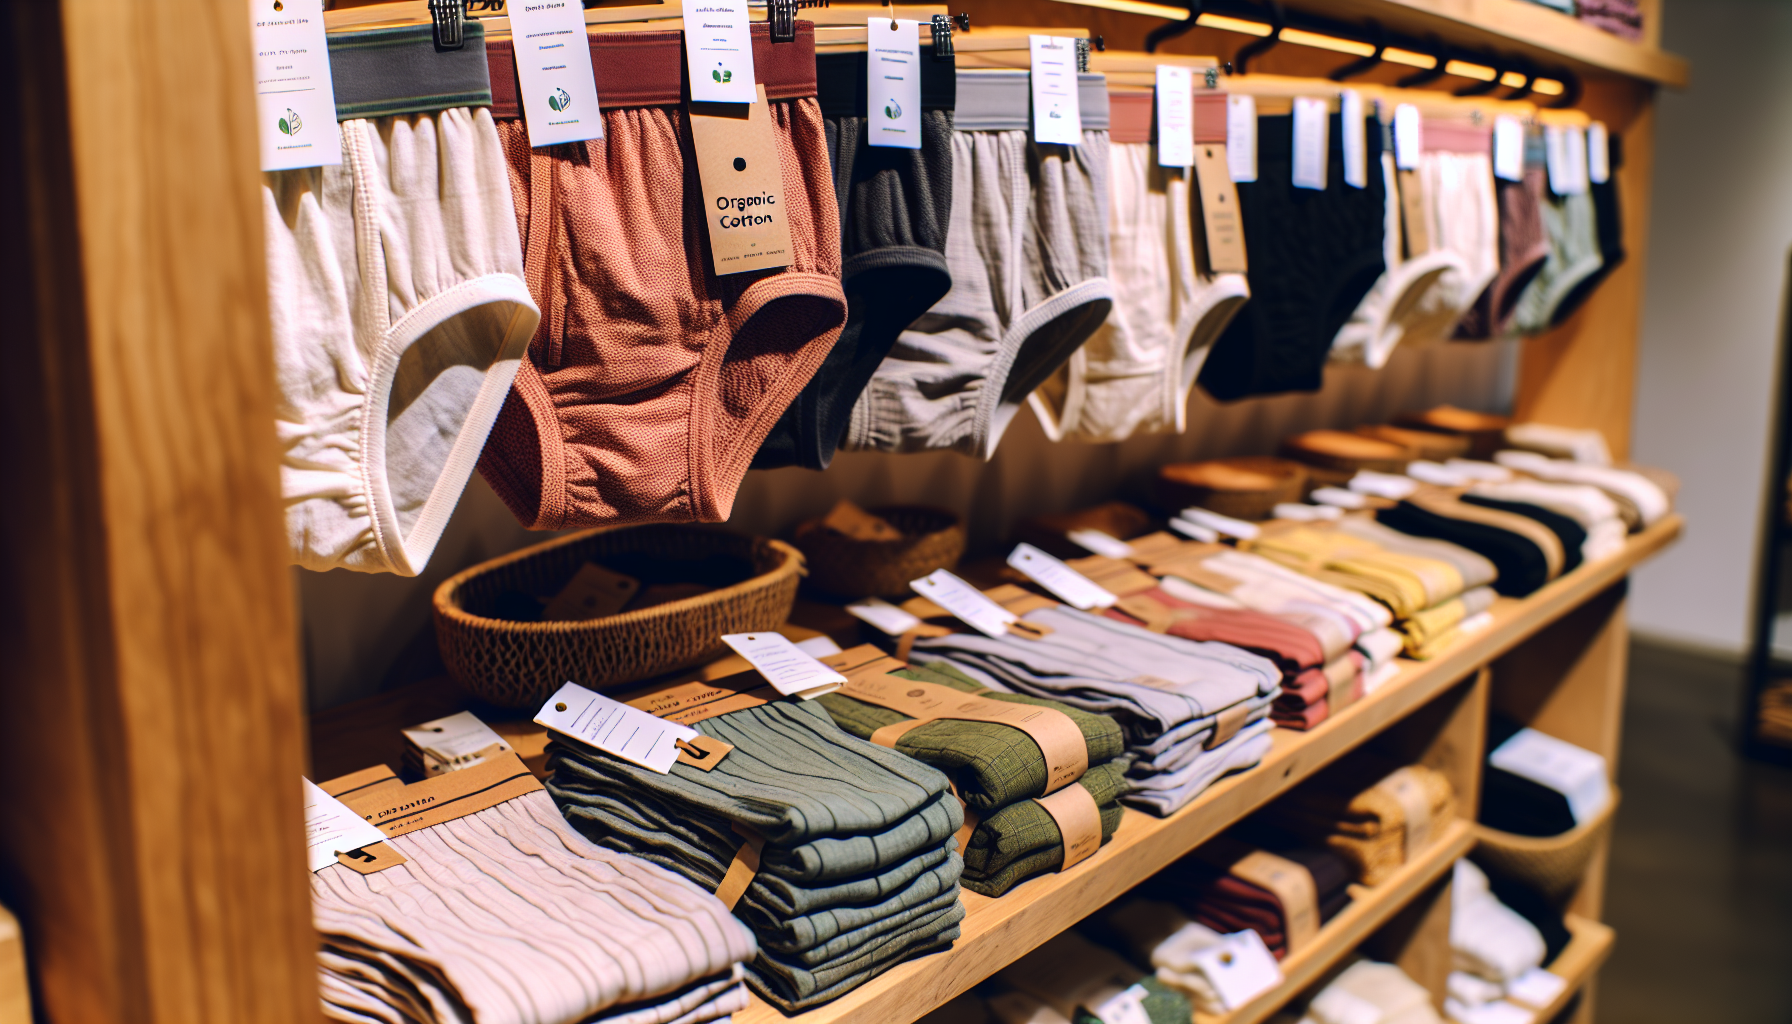 Organic cotton underwear displayed on a sustainable fashion store shelf